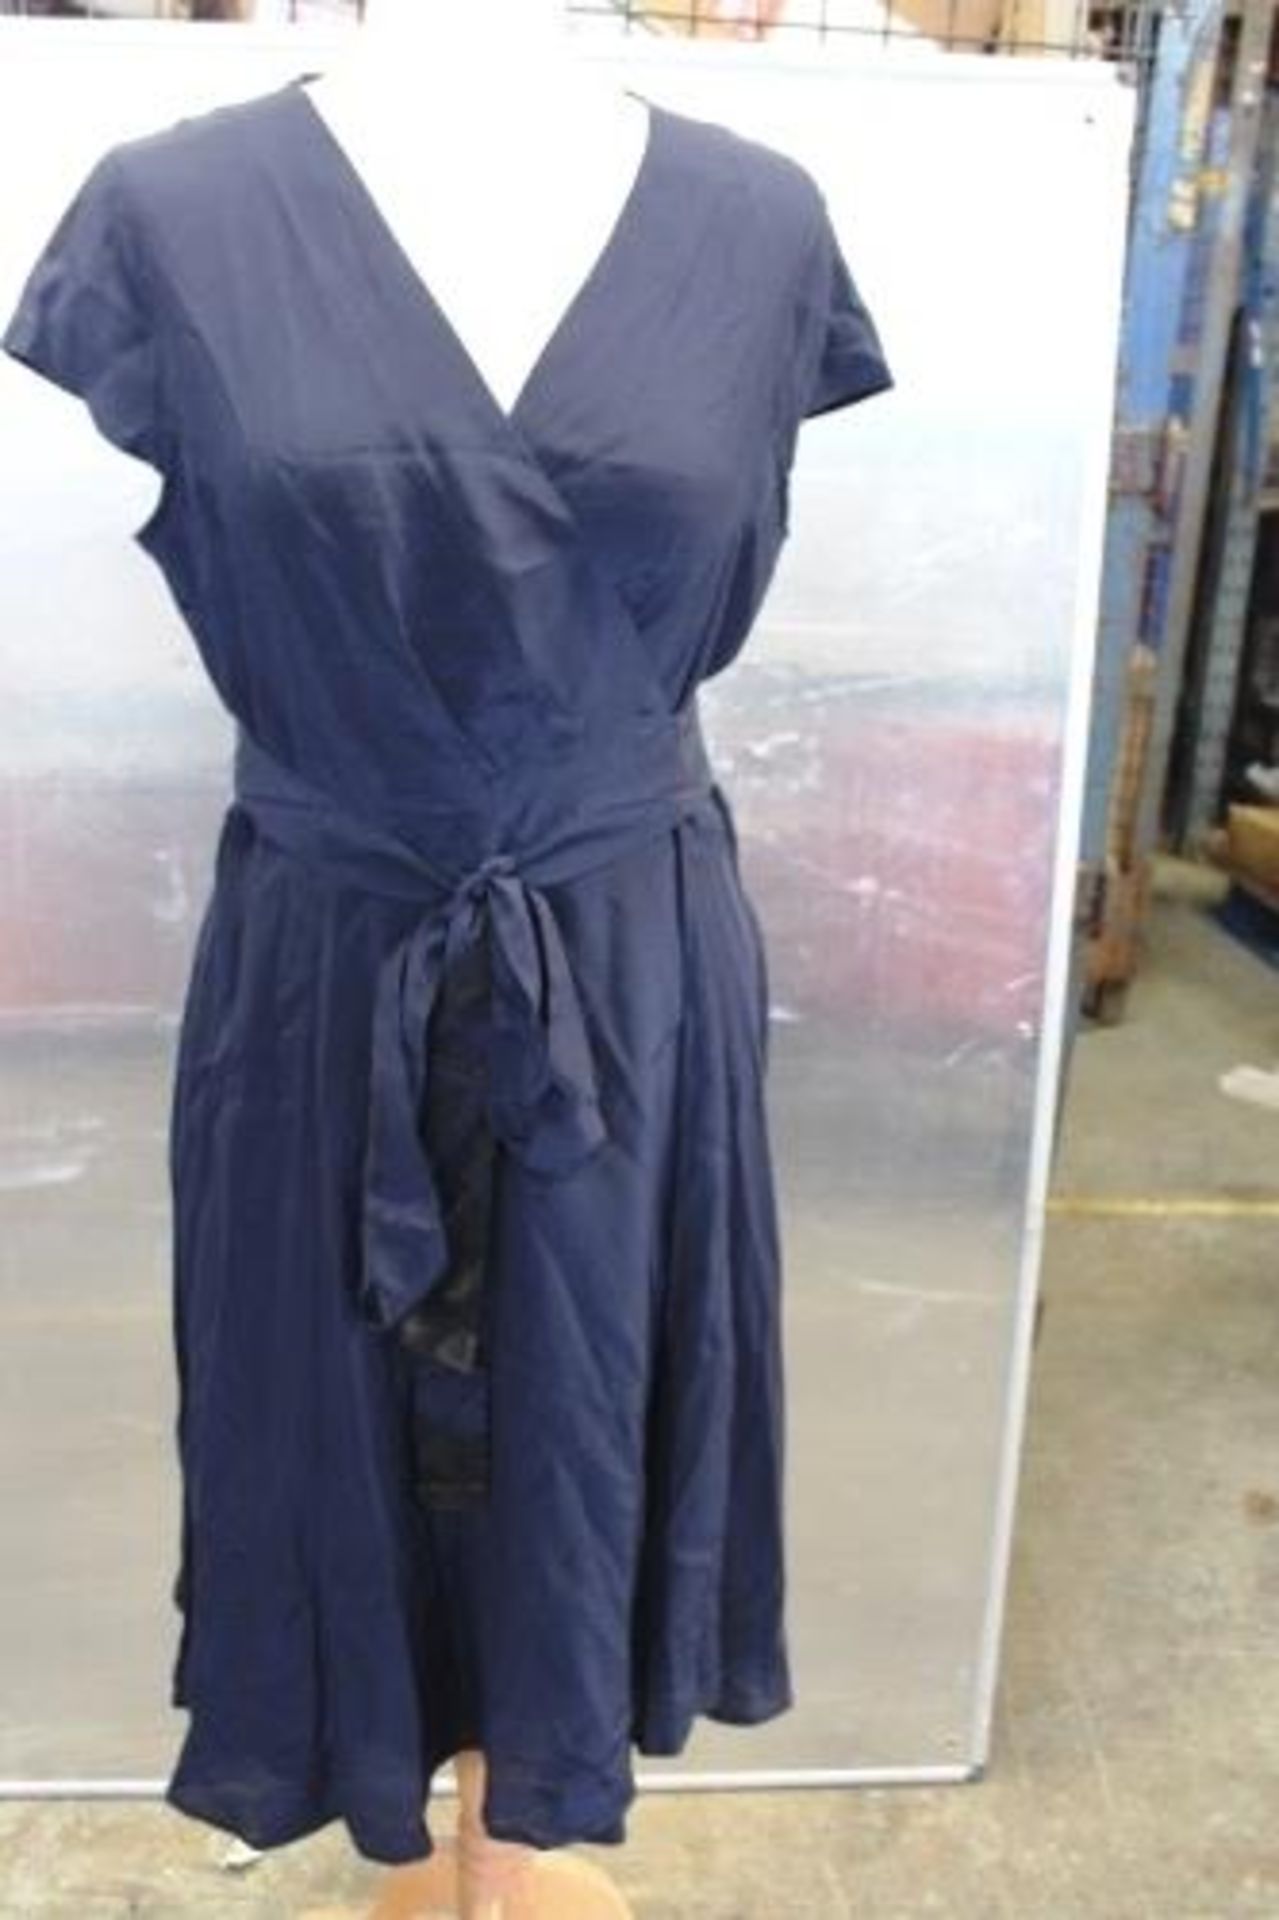 1 x Lily Silk wrap dress, size XL, RRP £240.00 - New in box (C13A)